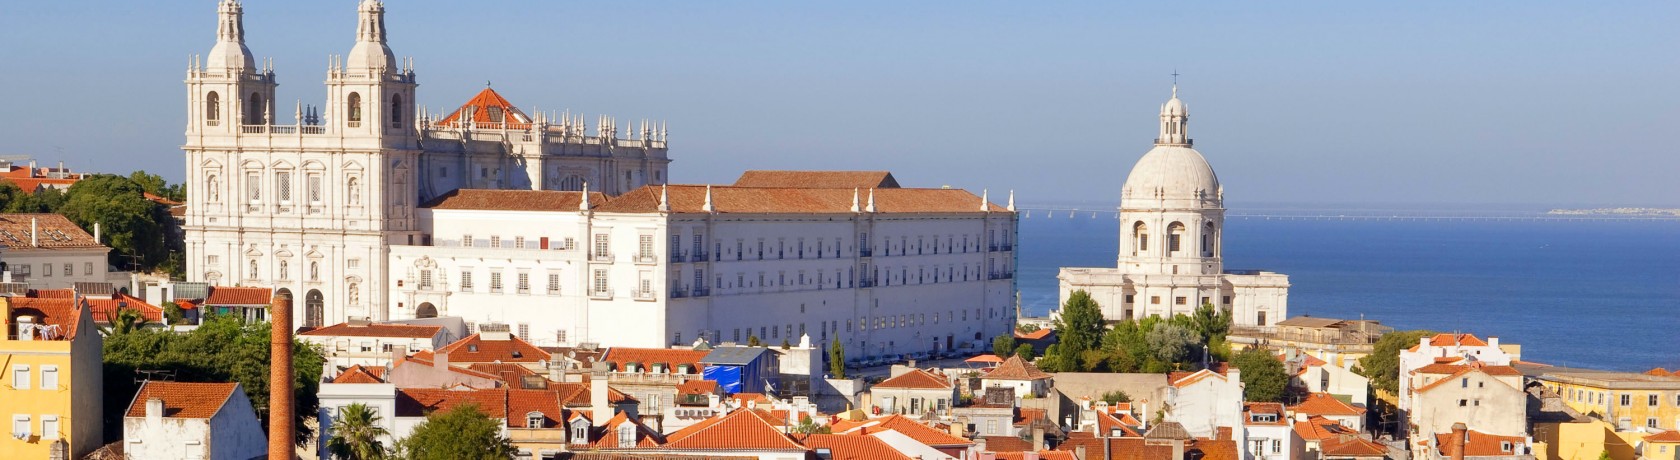 baxia-portugal